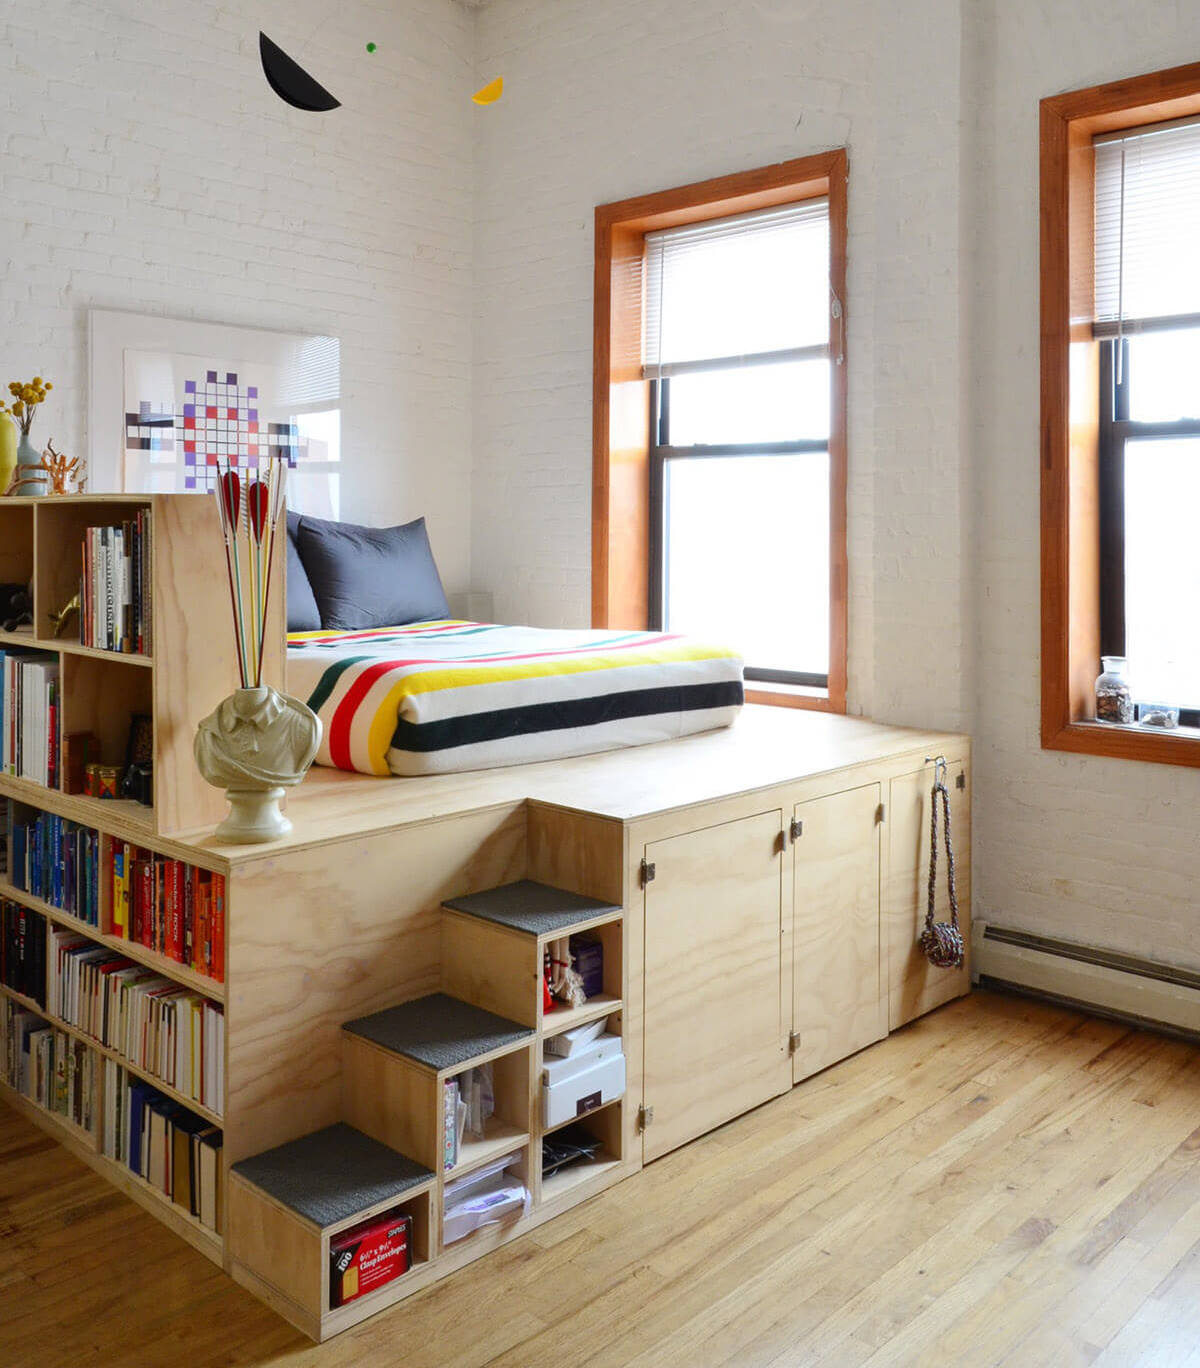 12 small bedroom designs and ideas homebnc.jpg